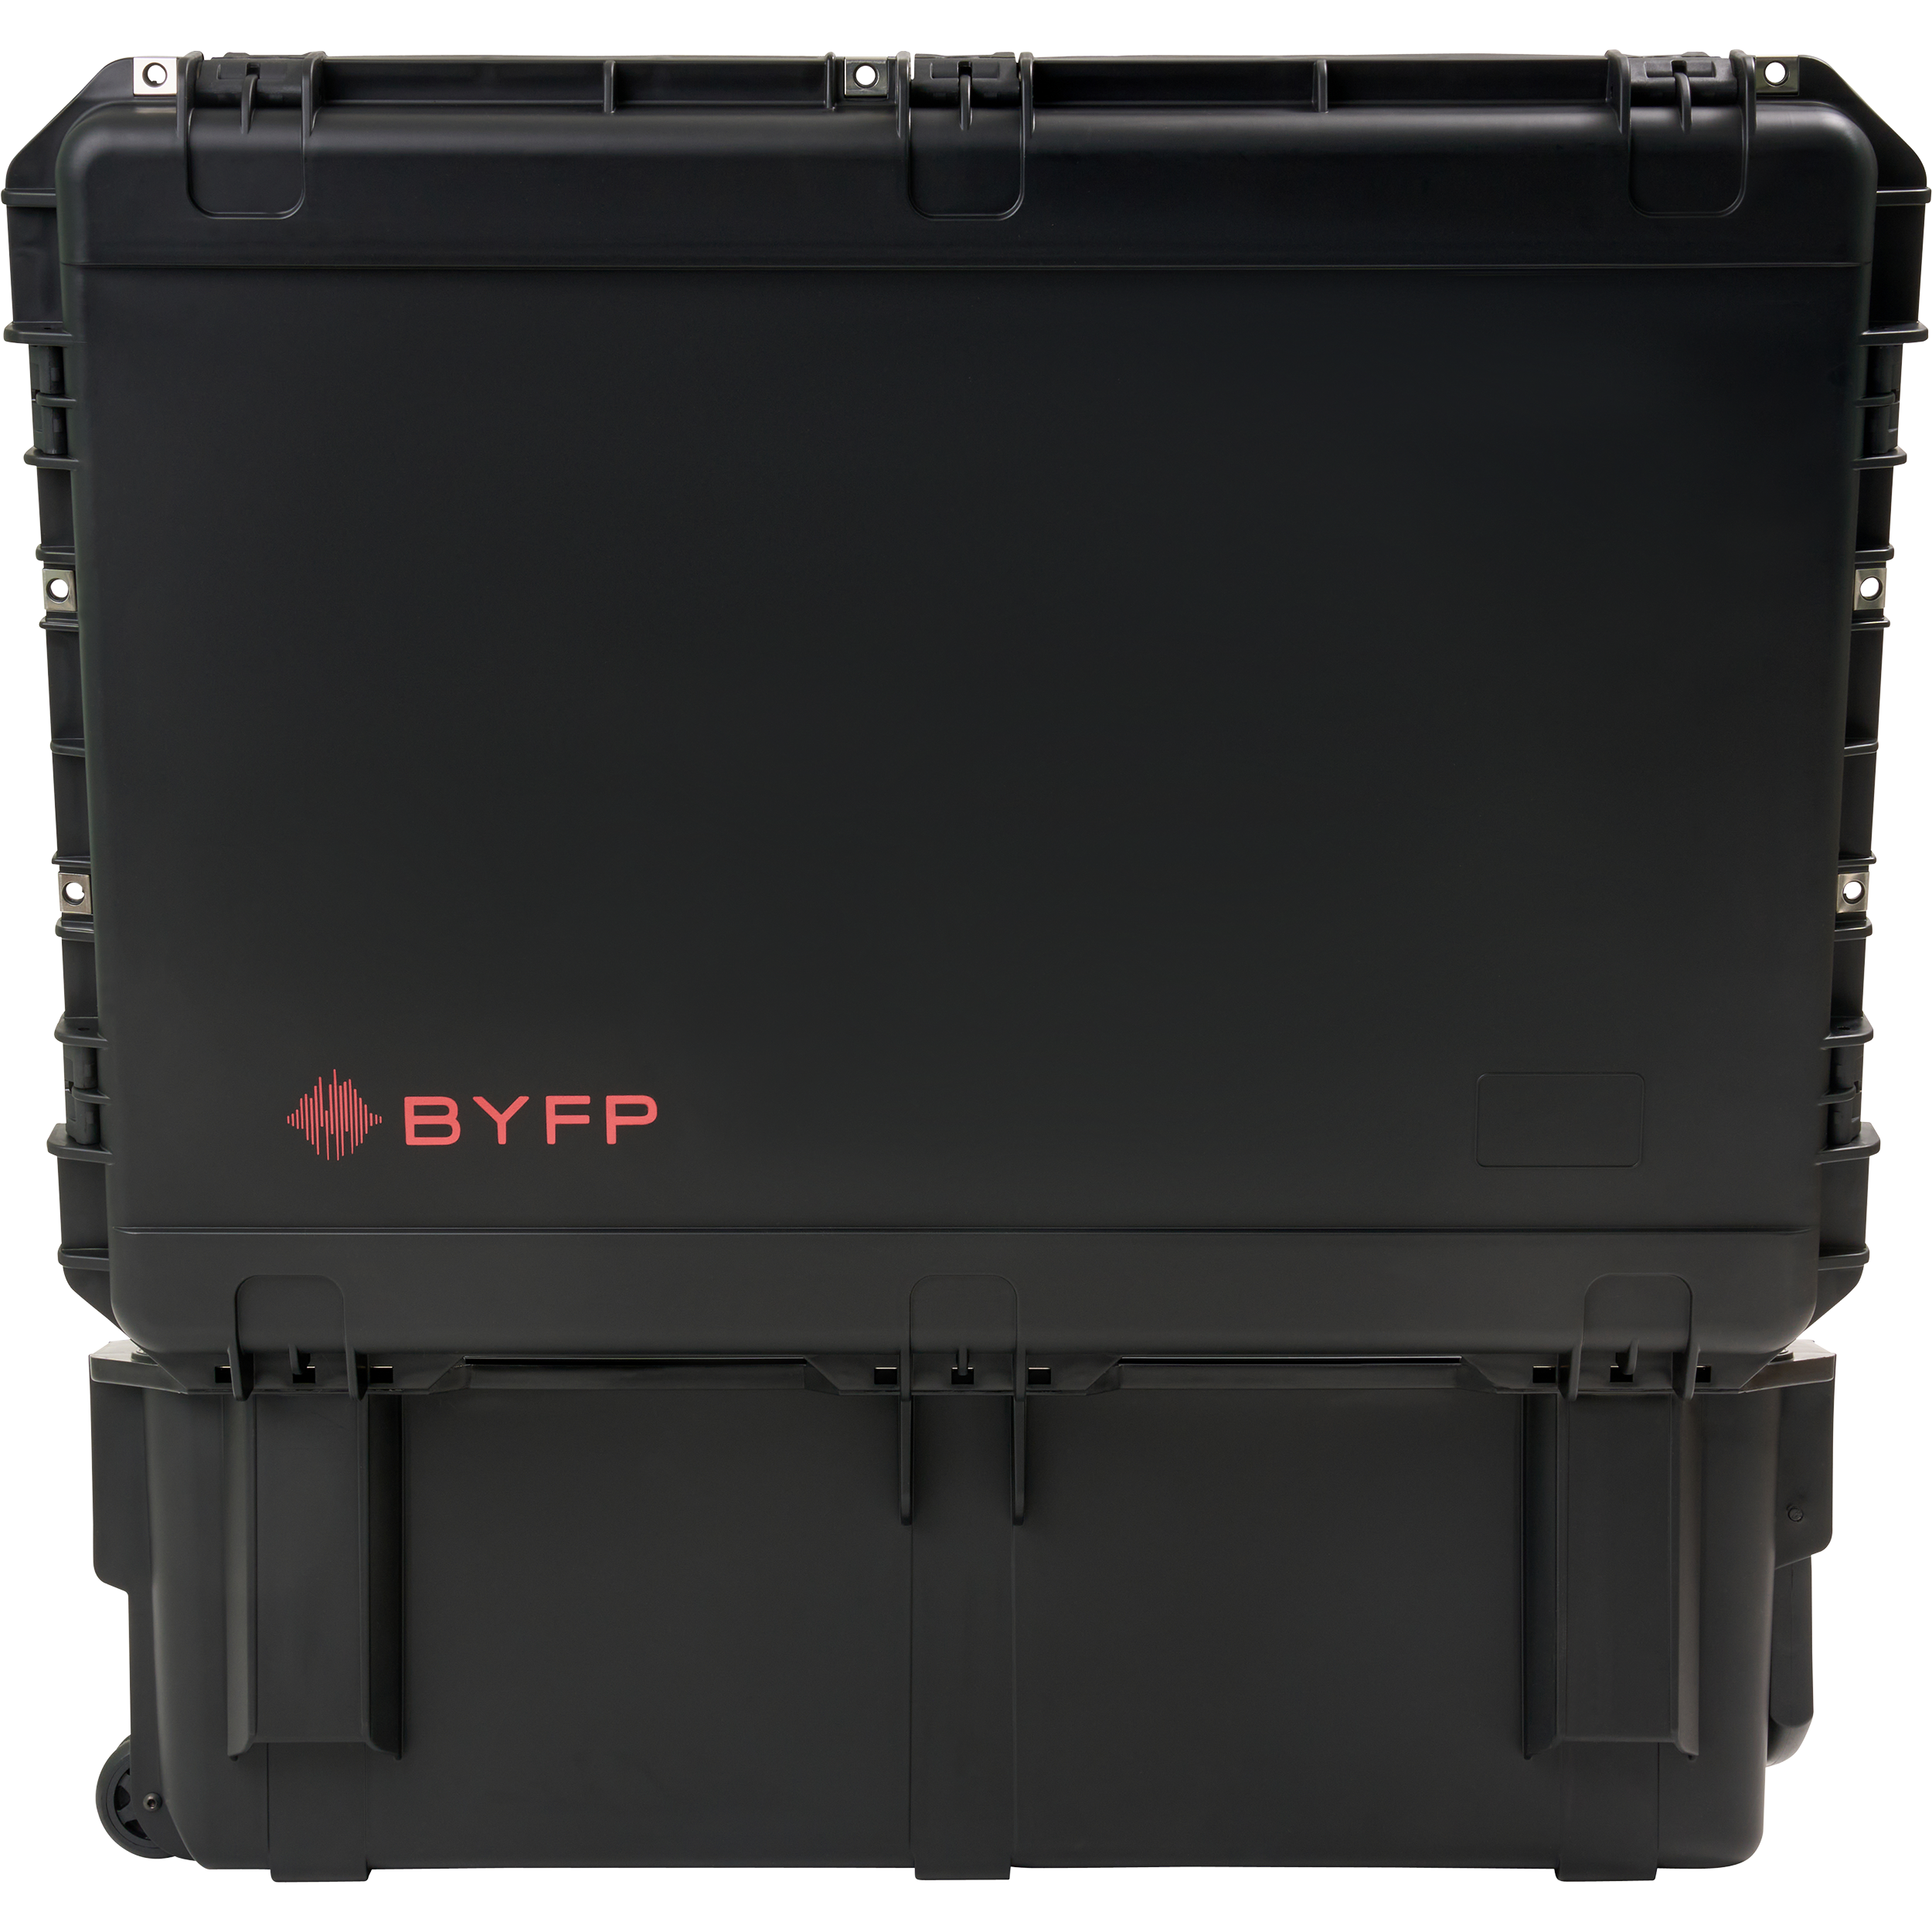 BYFP ipCase for Chauvet Professional onAir Panel 2 IP Light